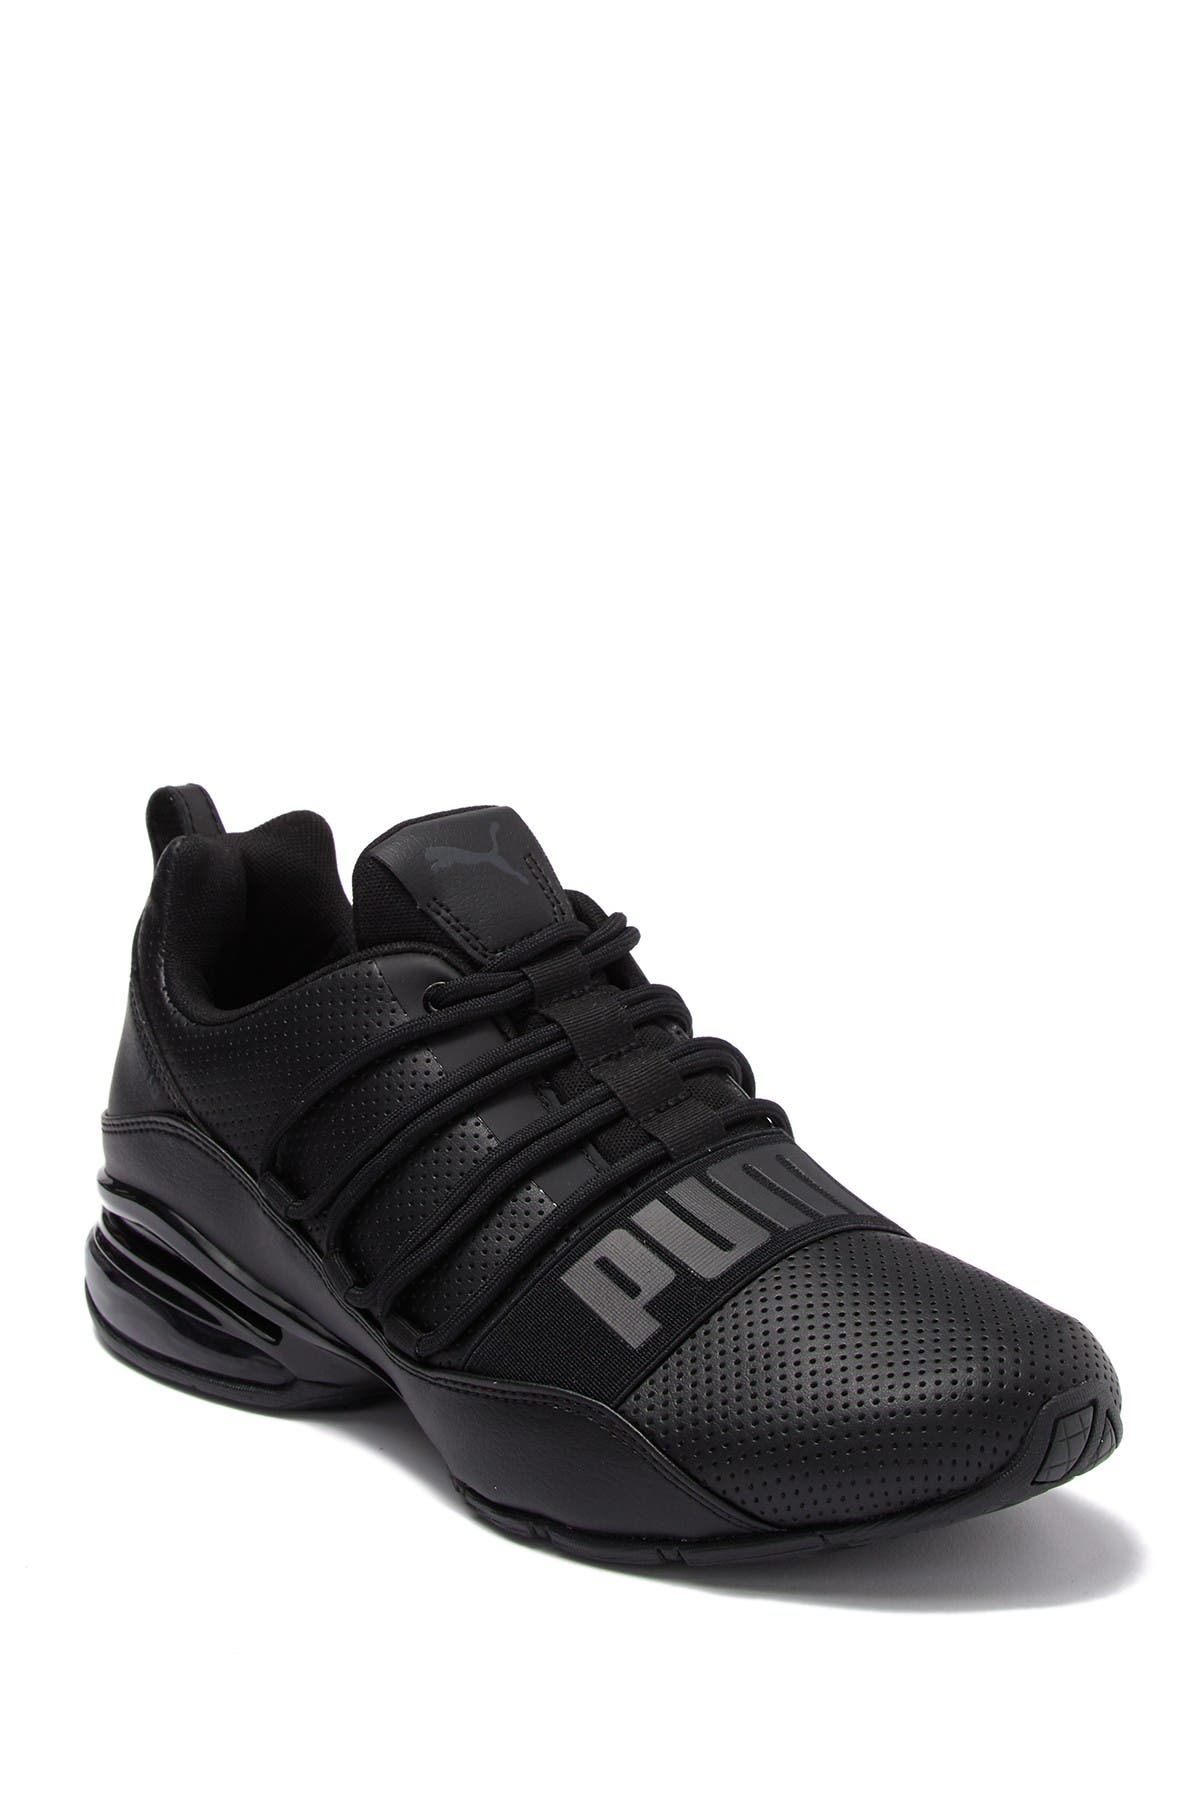 PUMA | Cell Regulate SL Sneaker 